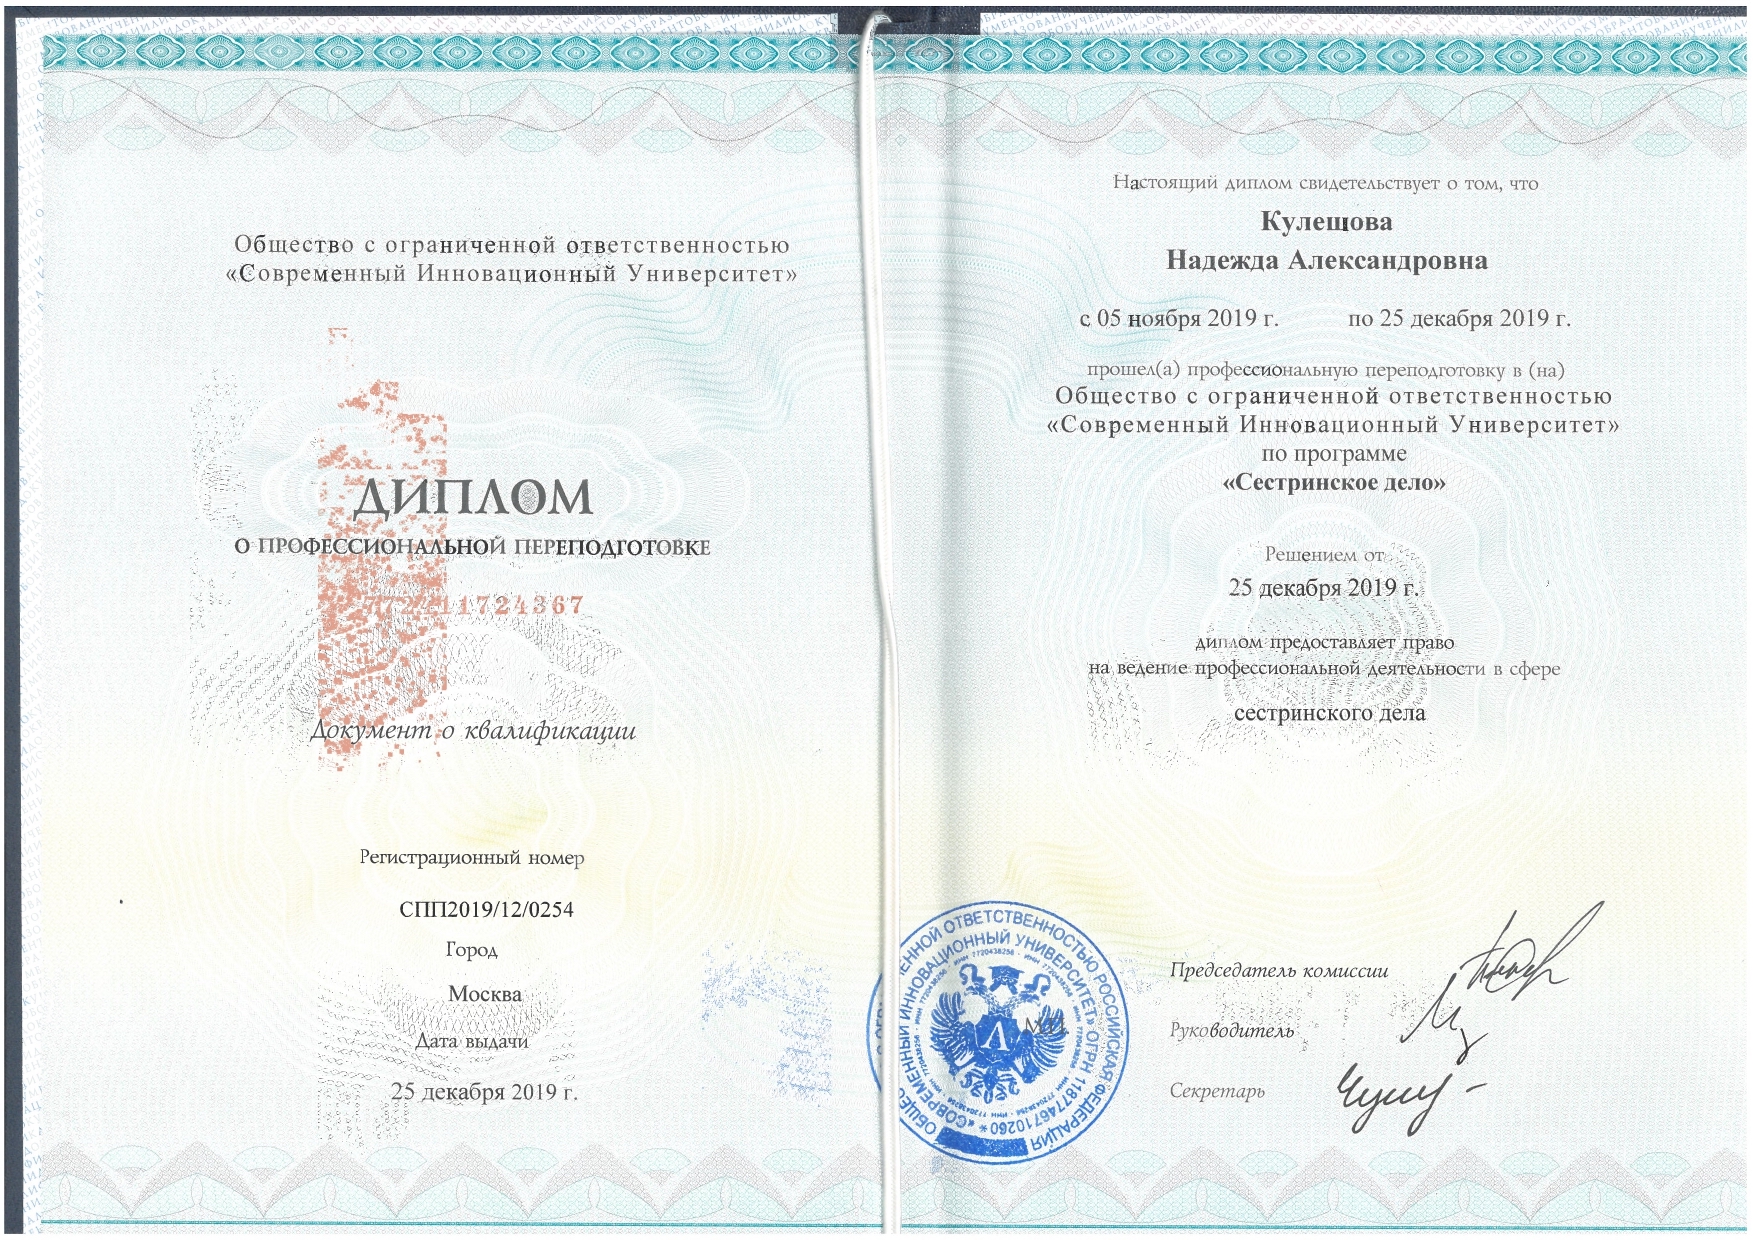 Сертификат Кулешова